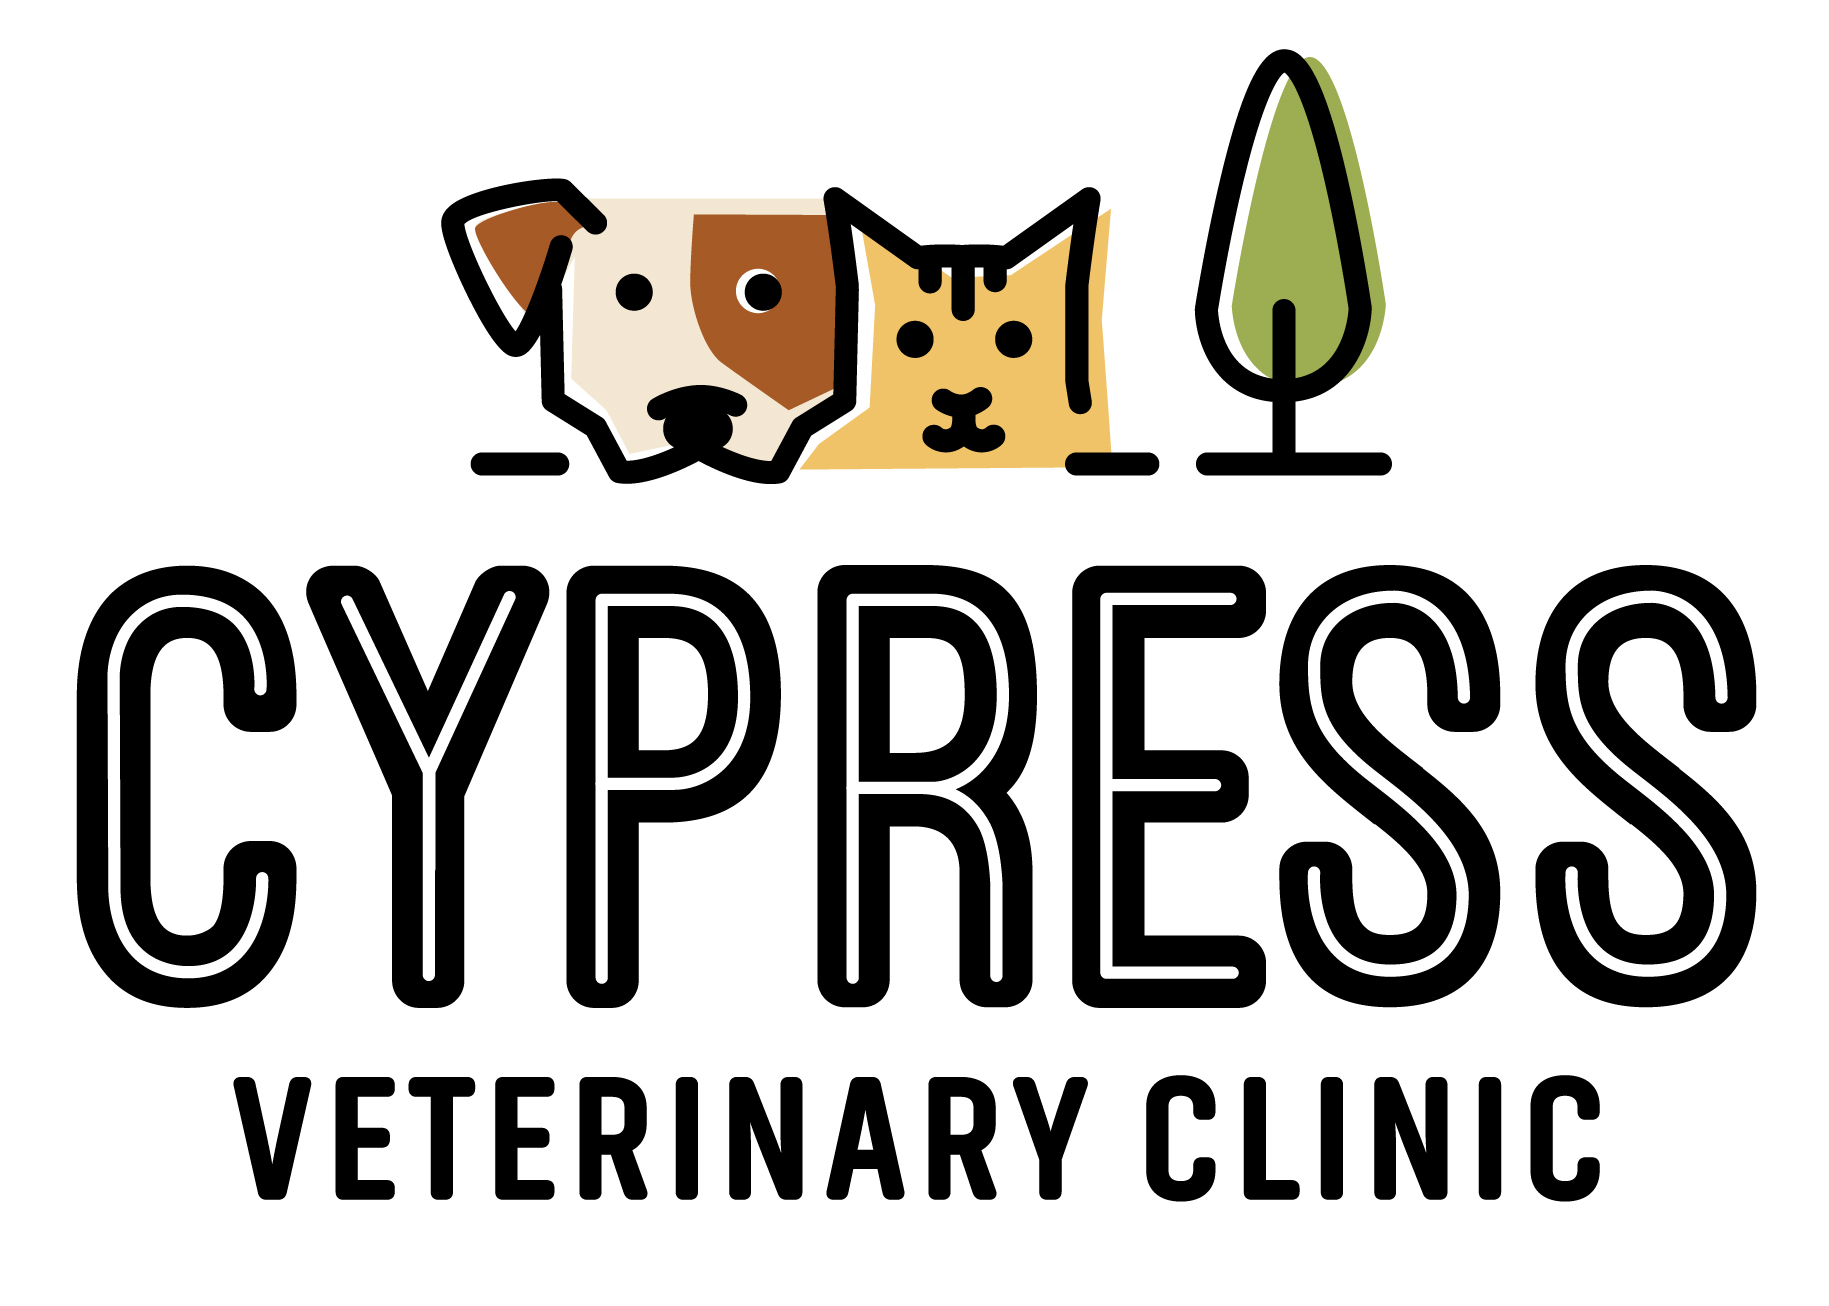 Cypress Veterinary Clinic